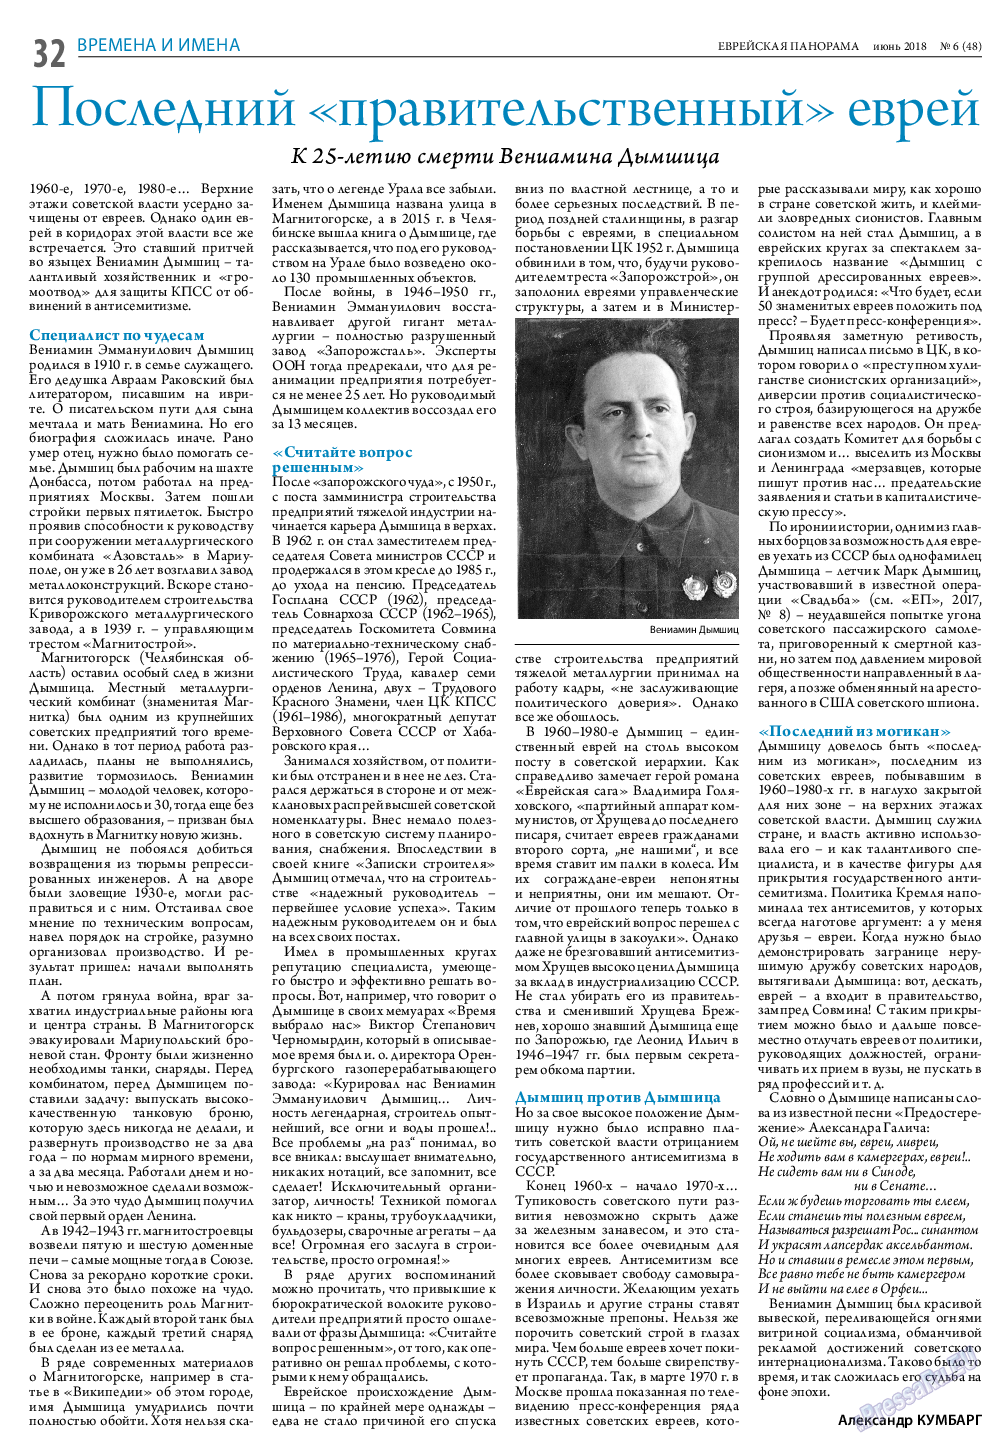 Еврейская панорама, газета. 2018 №6 стр.32